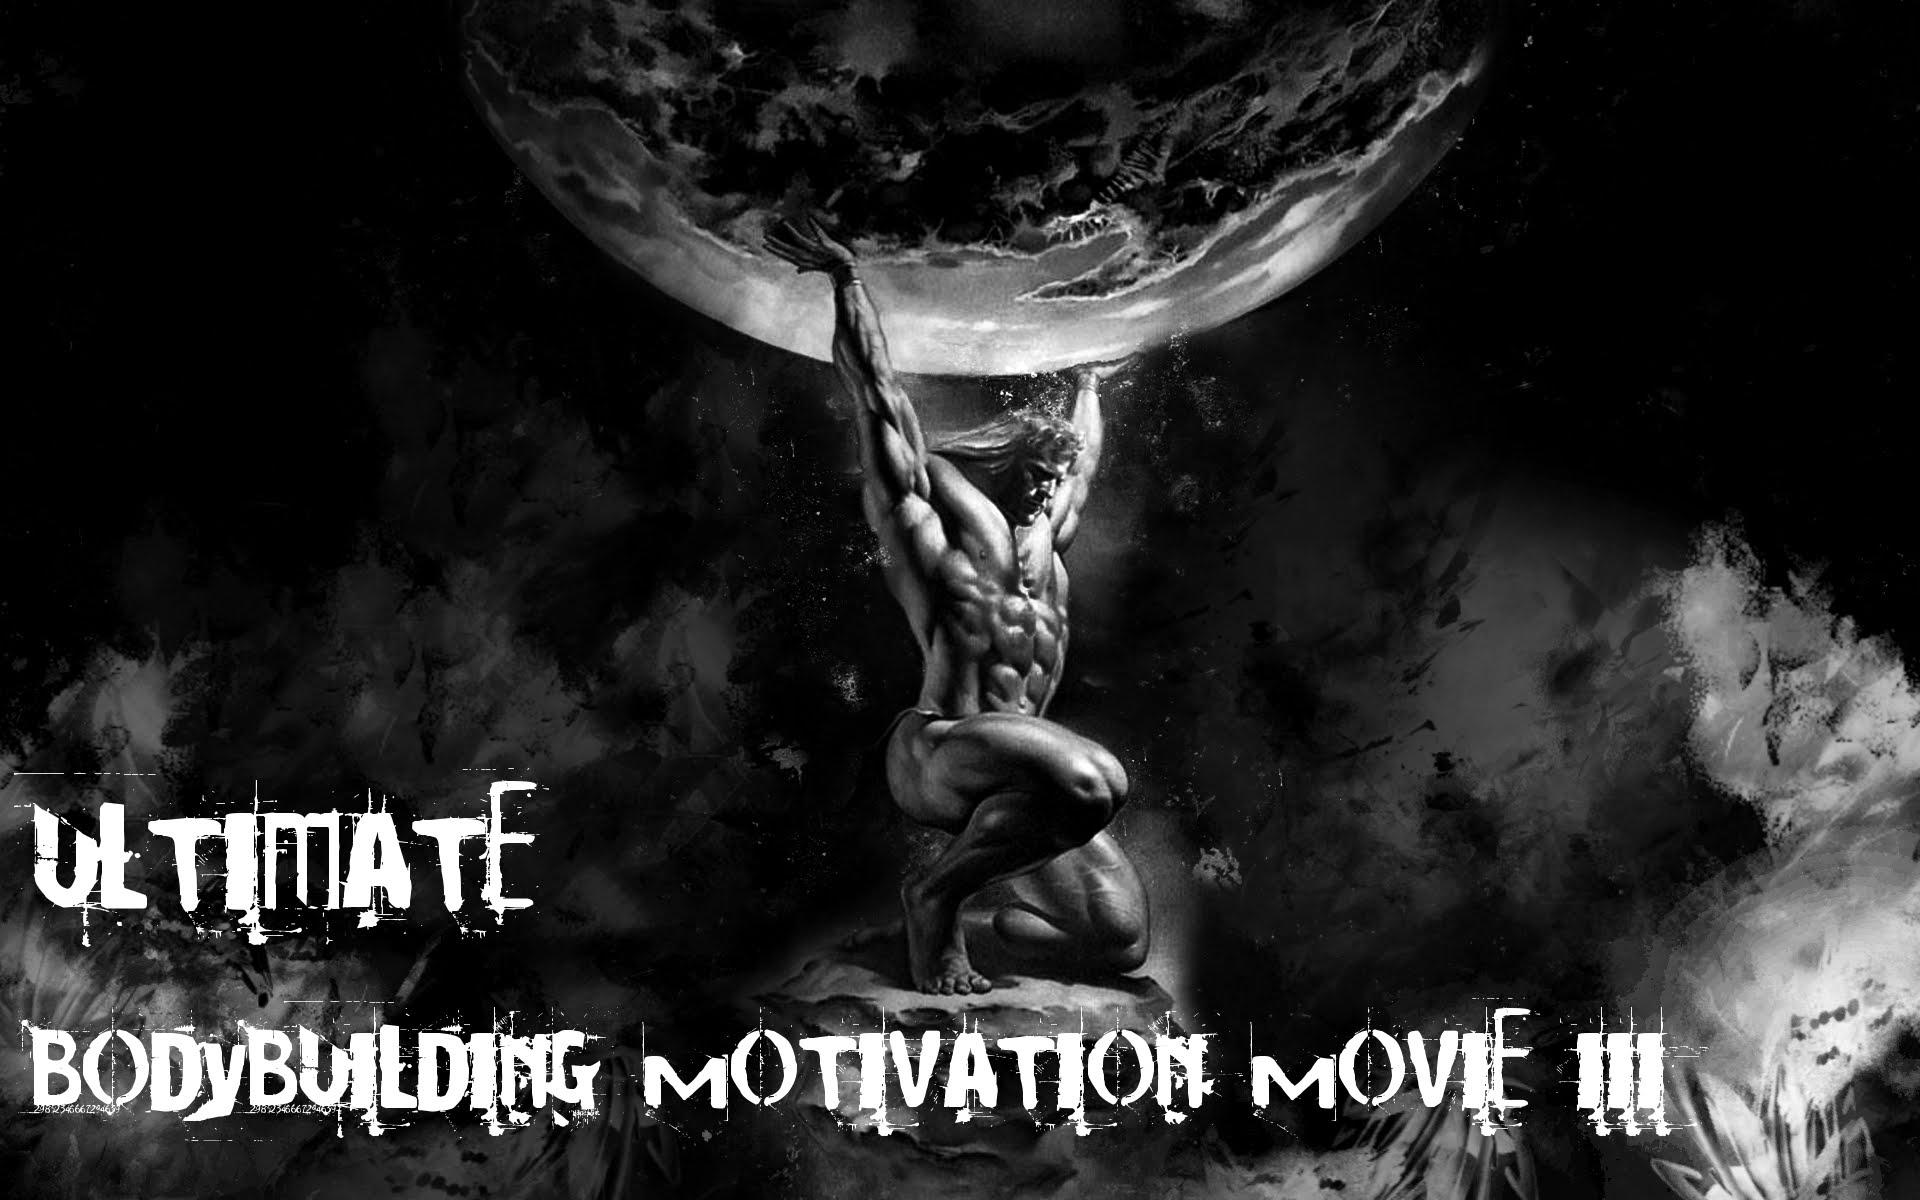 ULTIMATE BODYBUILDING MOTIVATION MOVIE III